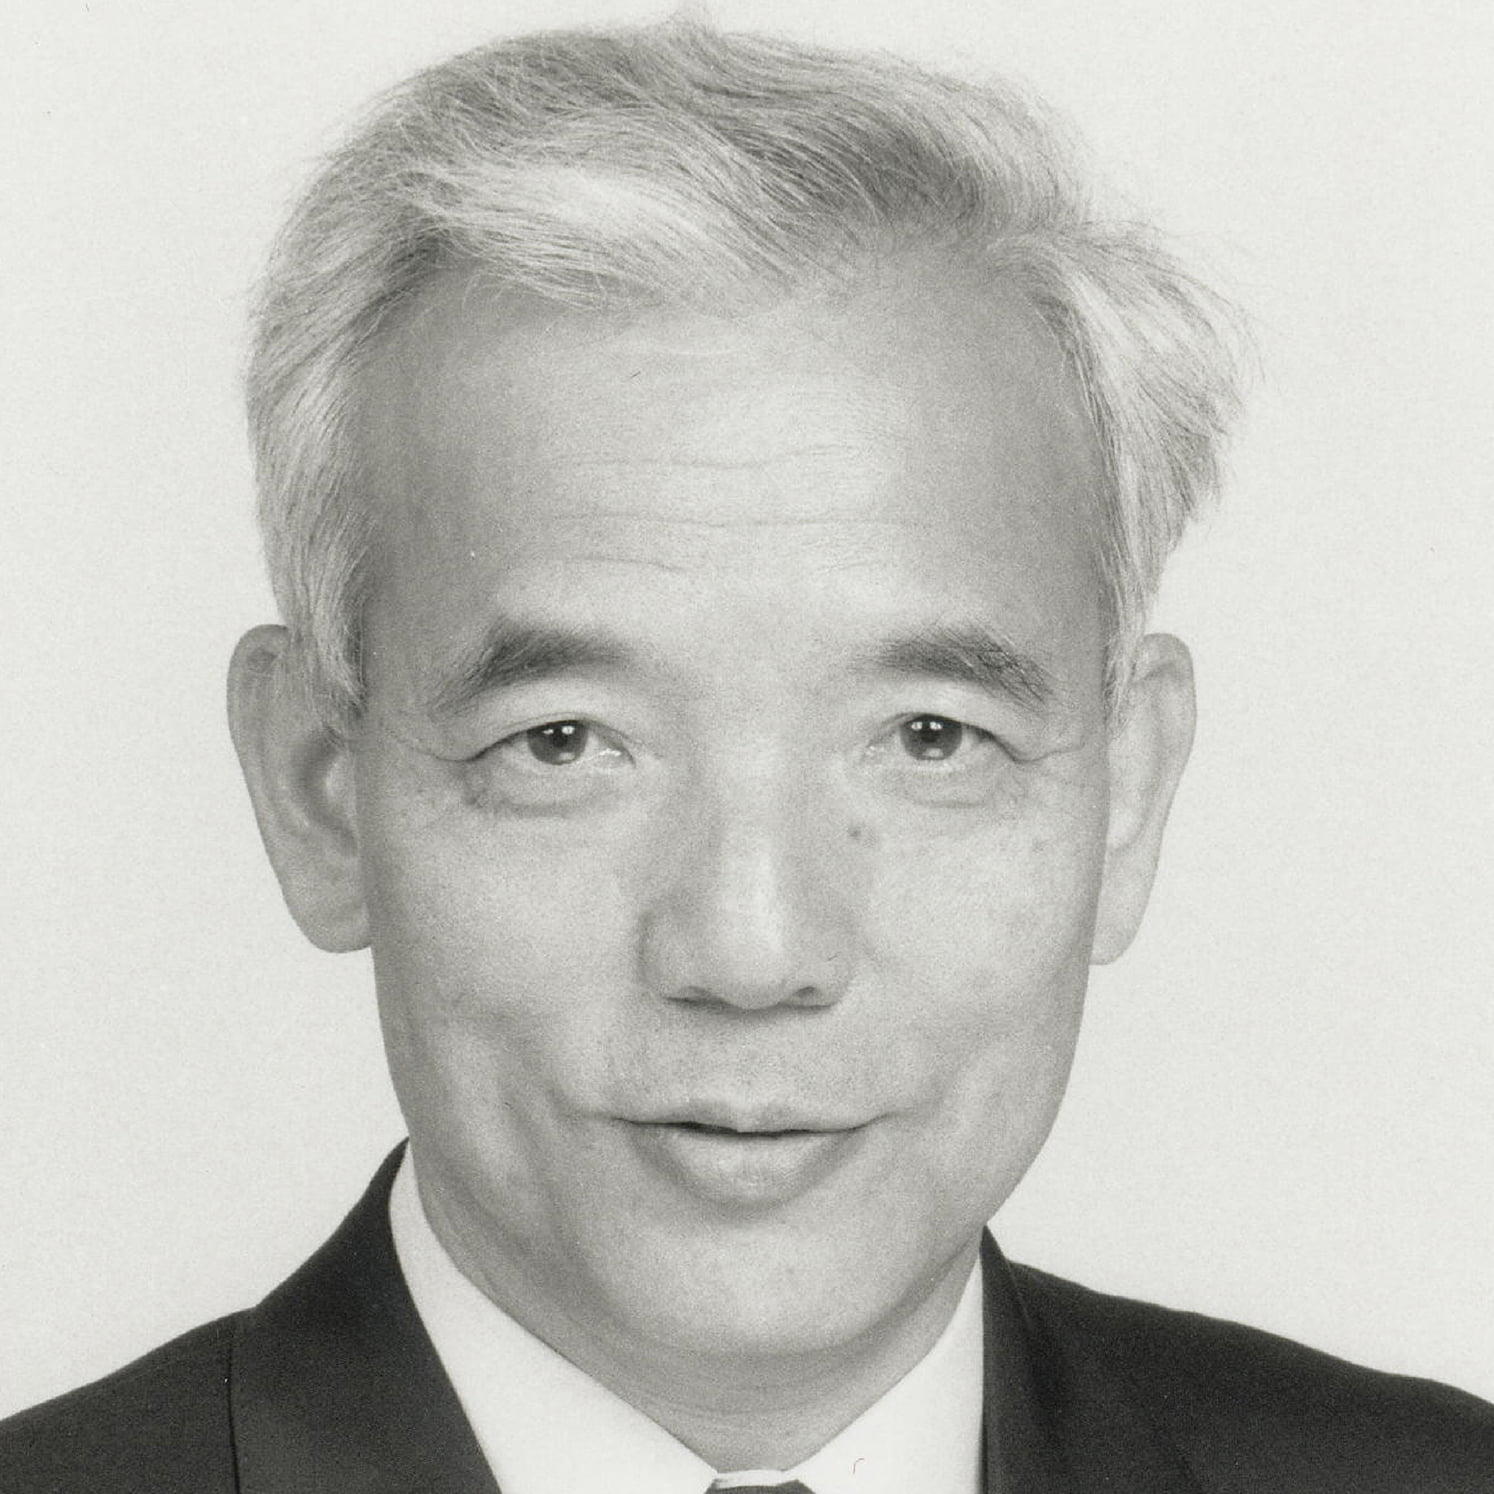 Dr. Syukuro Manabe